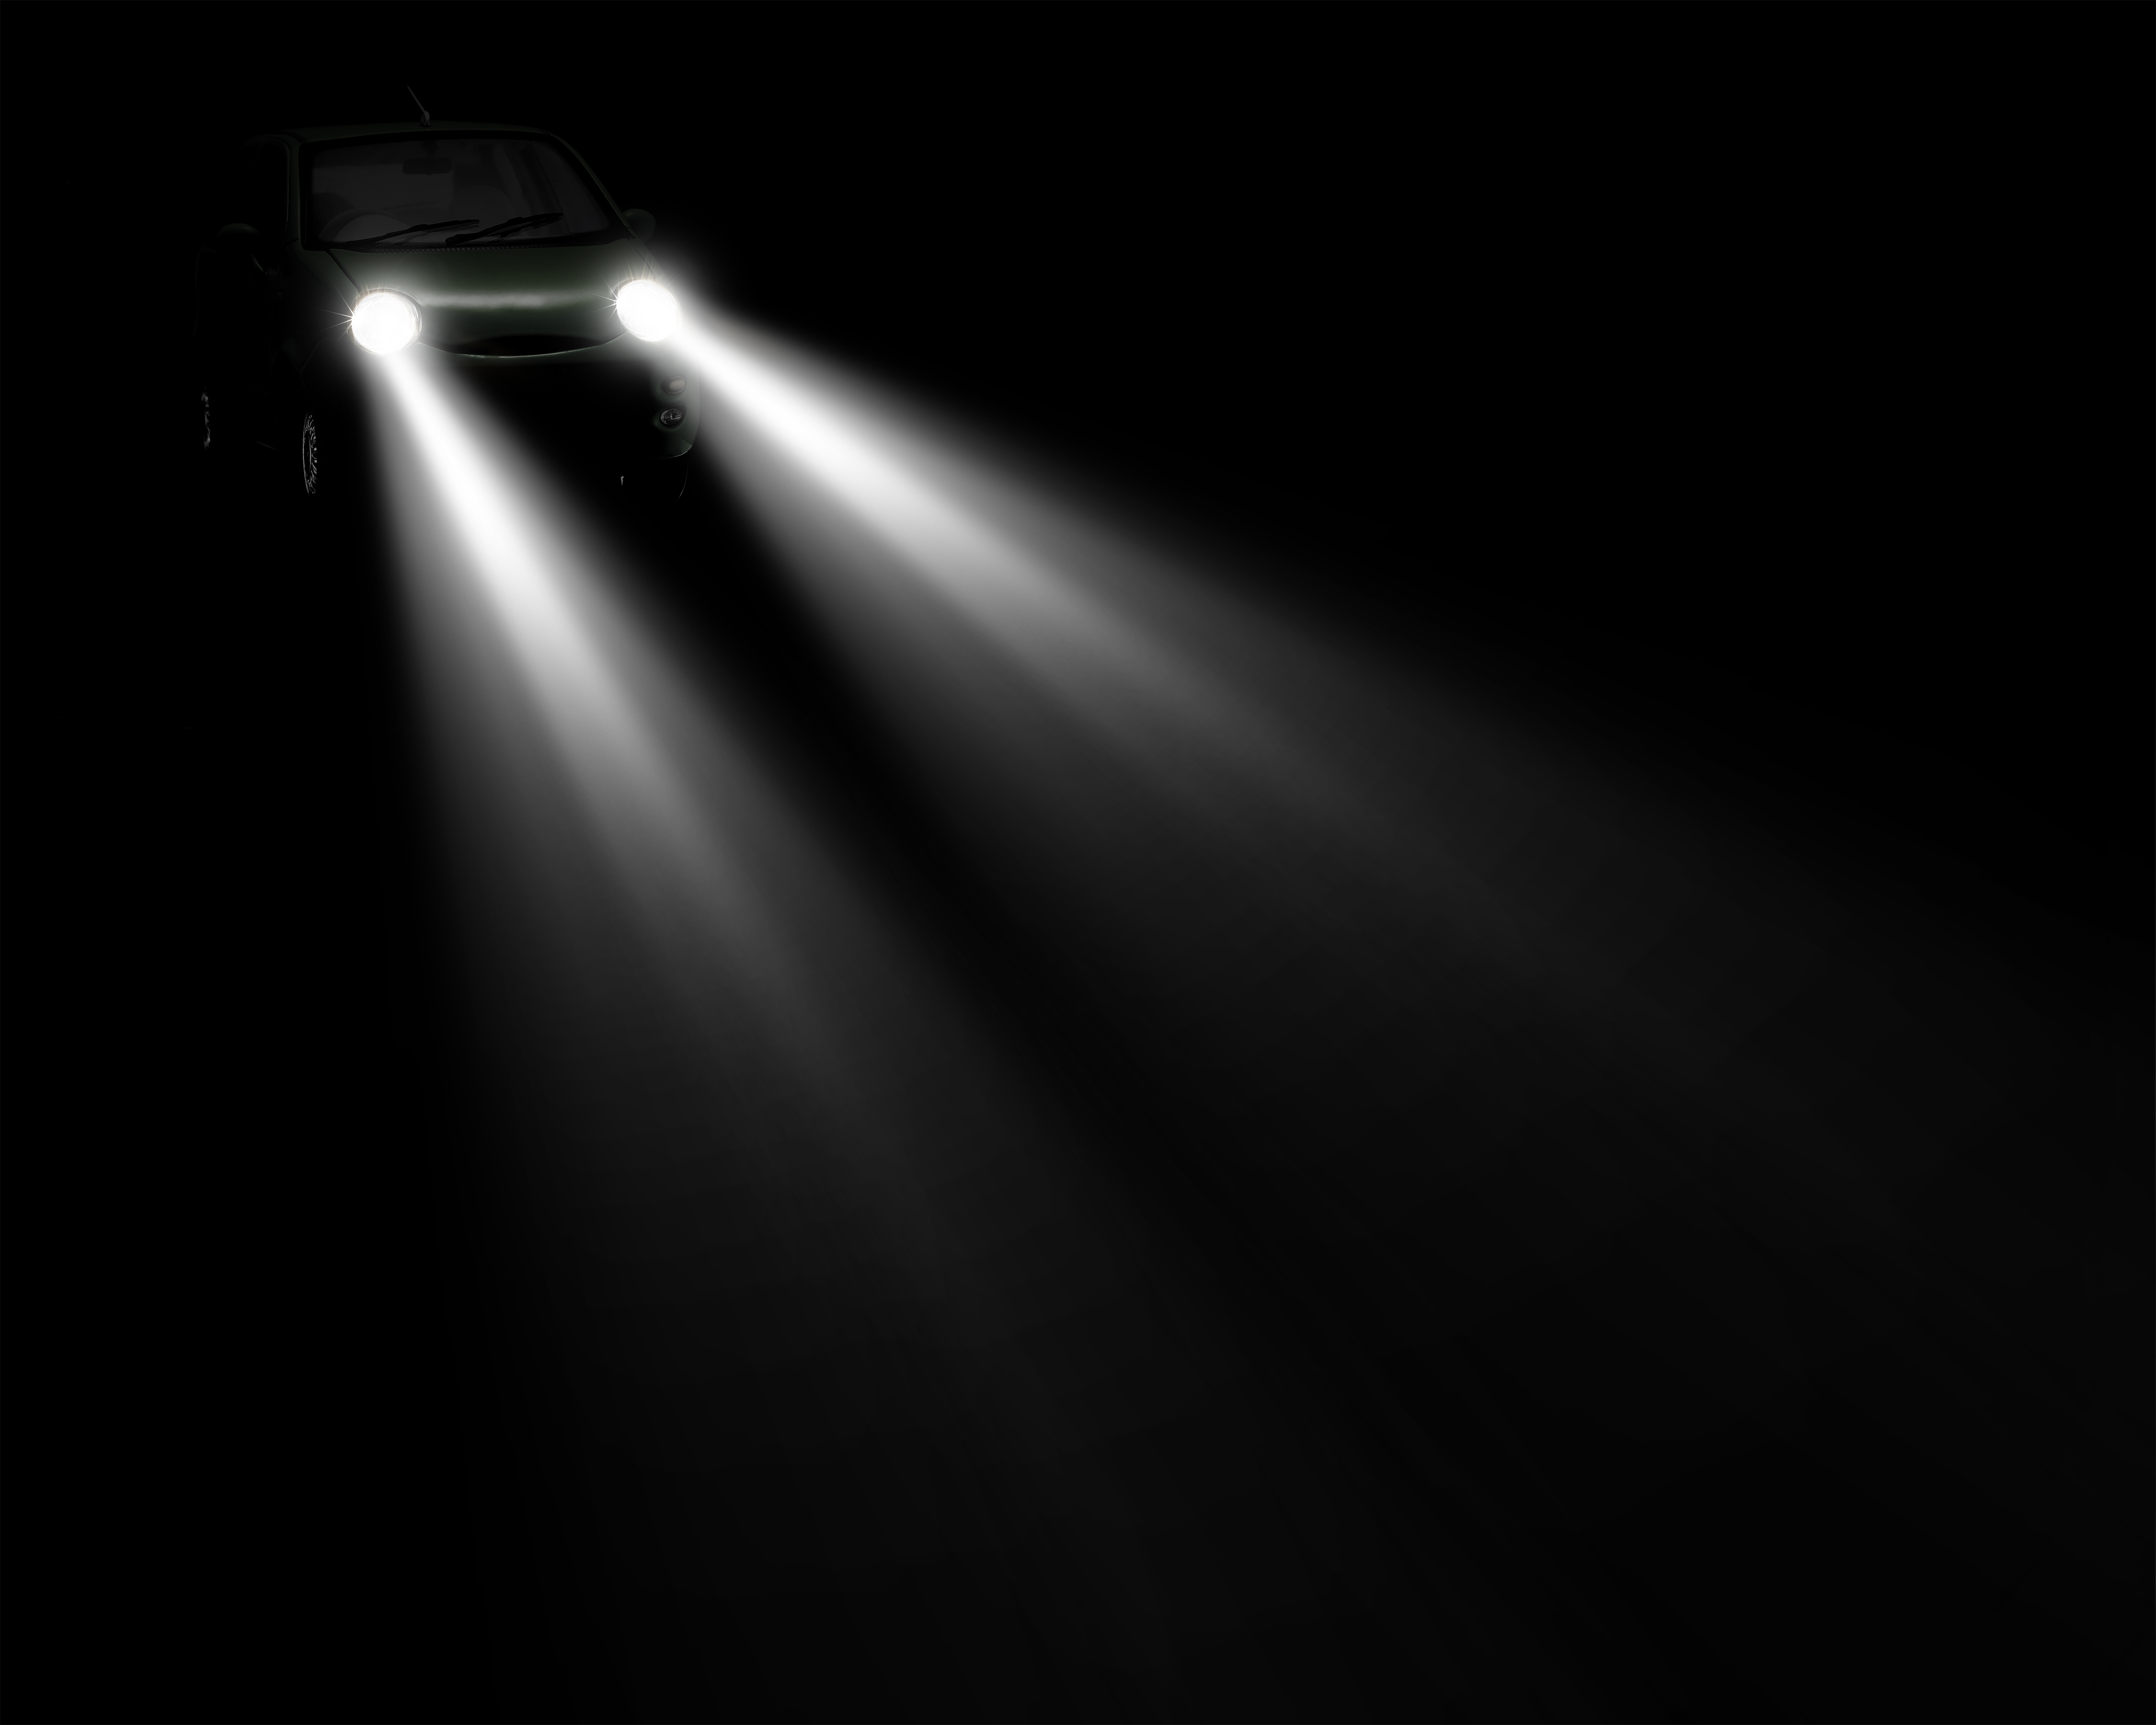 Vehicle in top left corner shining bright headlights on black background